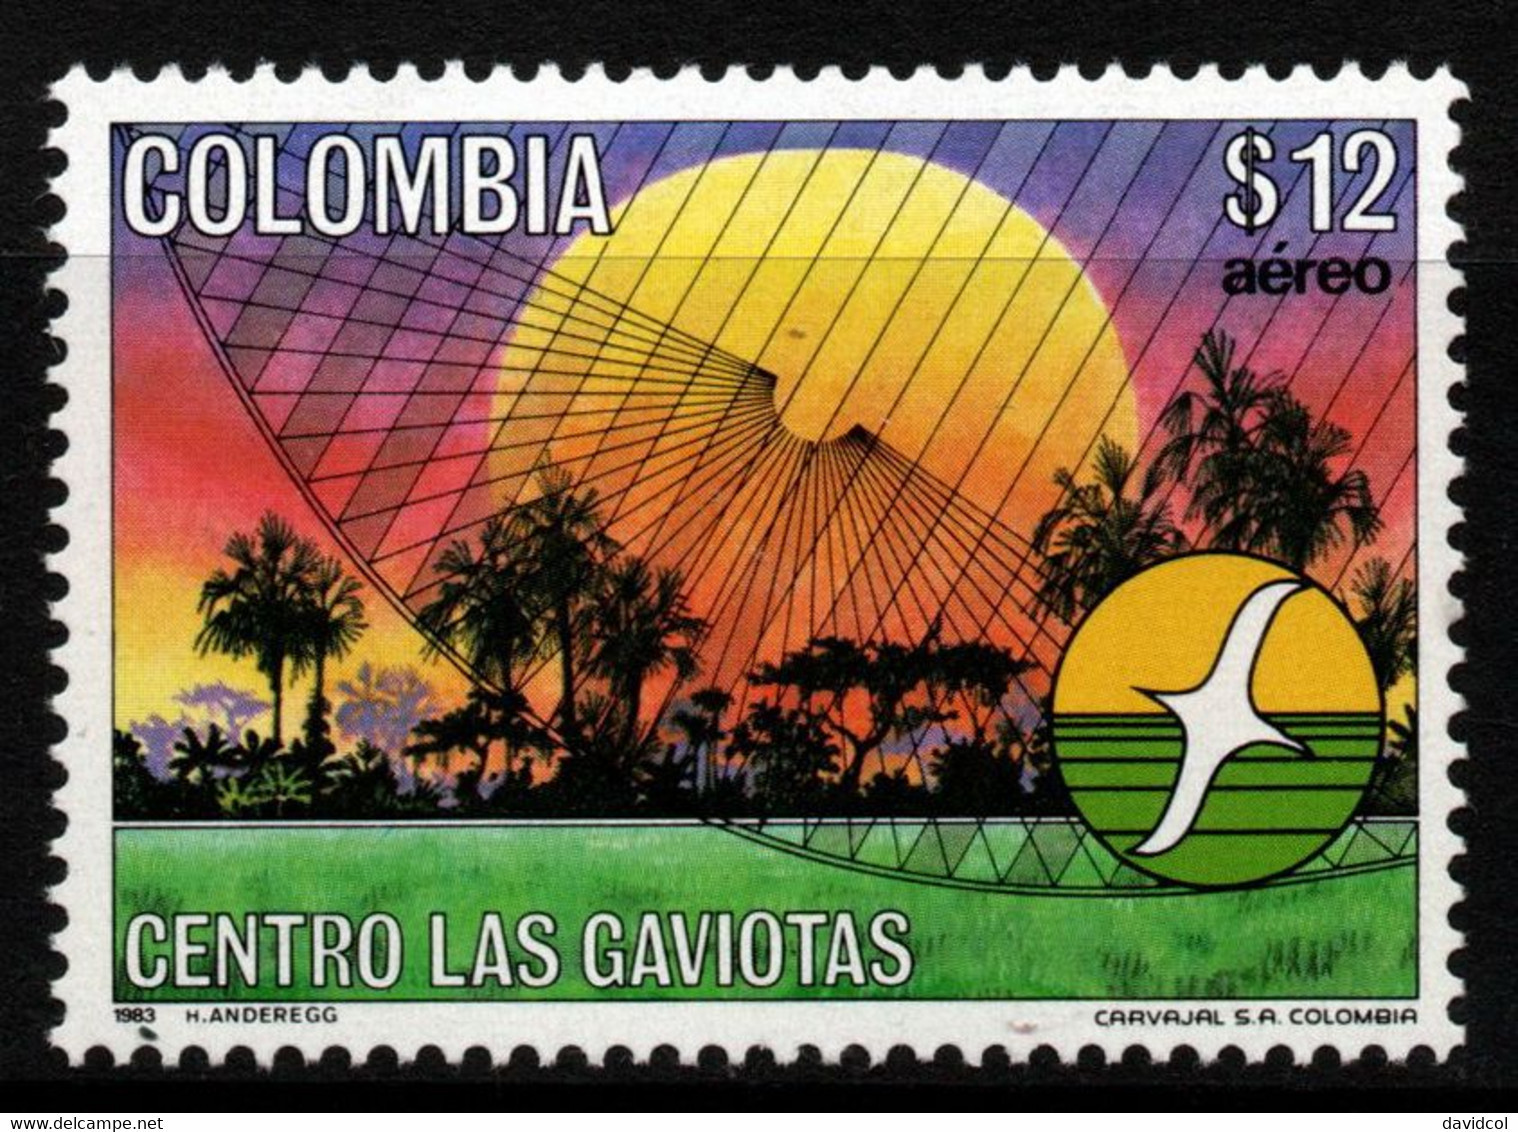 03- KOLUMBIEN - 1983- MI#:1611- MNH- “LAS GAVIOTAS” CENTER - Colombia